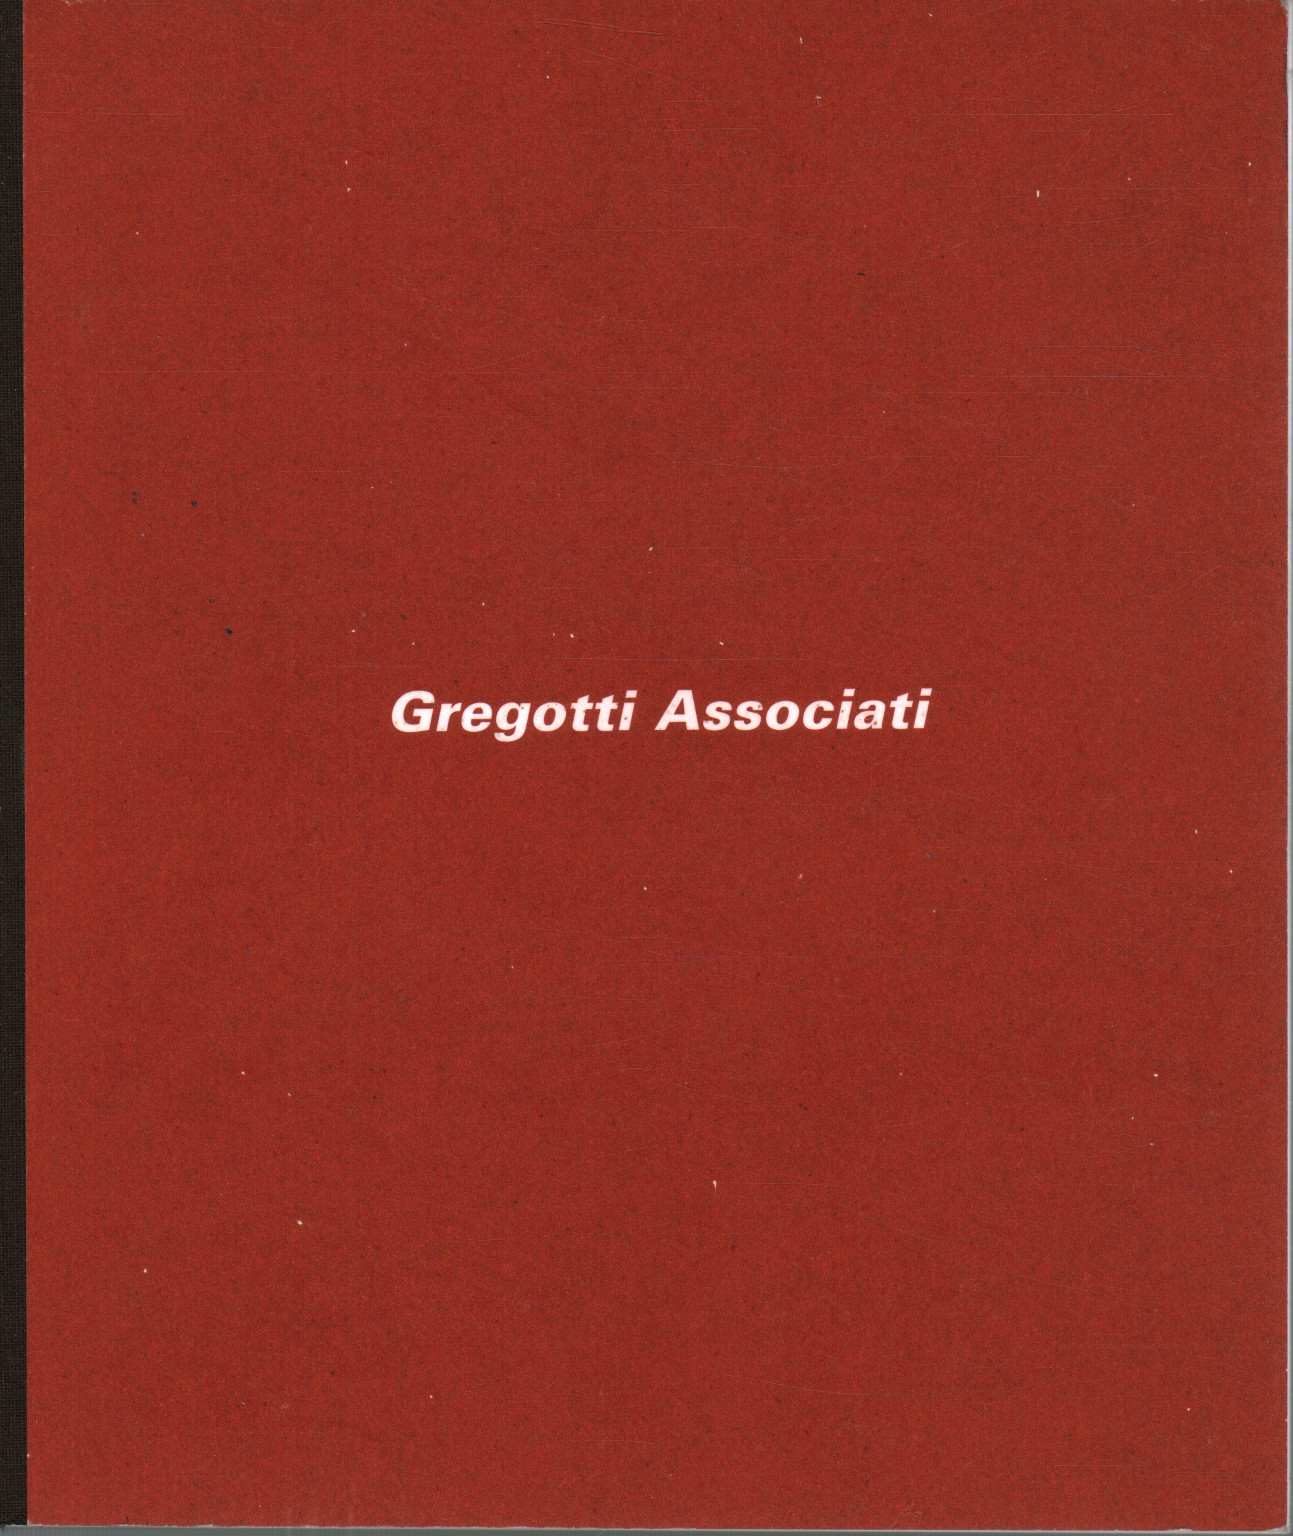 Gregotti Associati International, s.a.